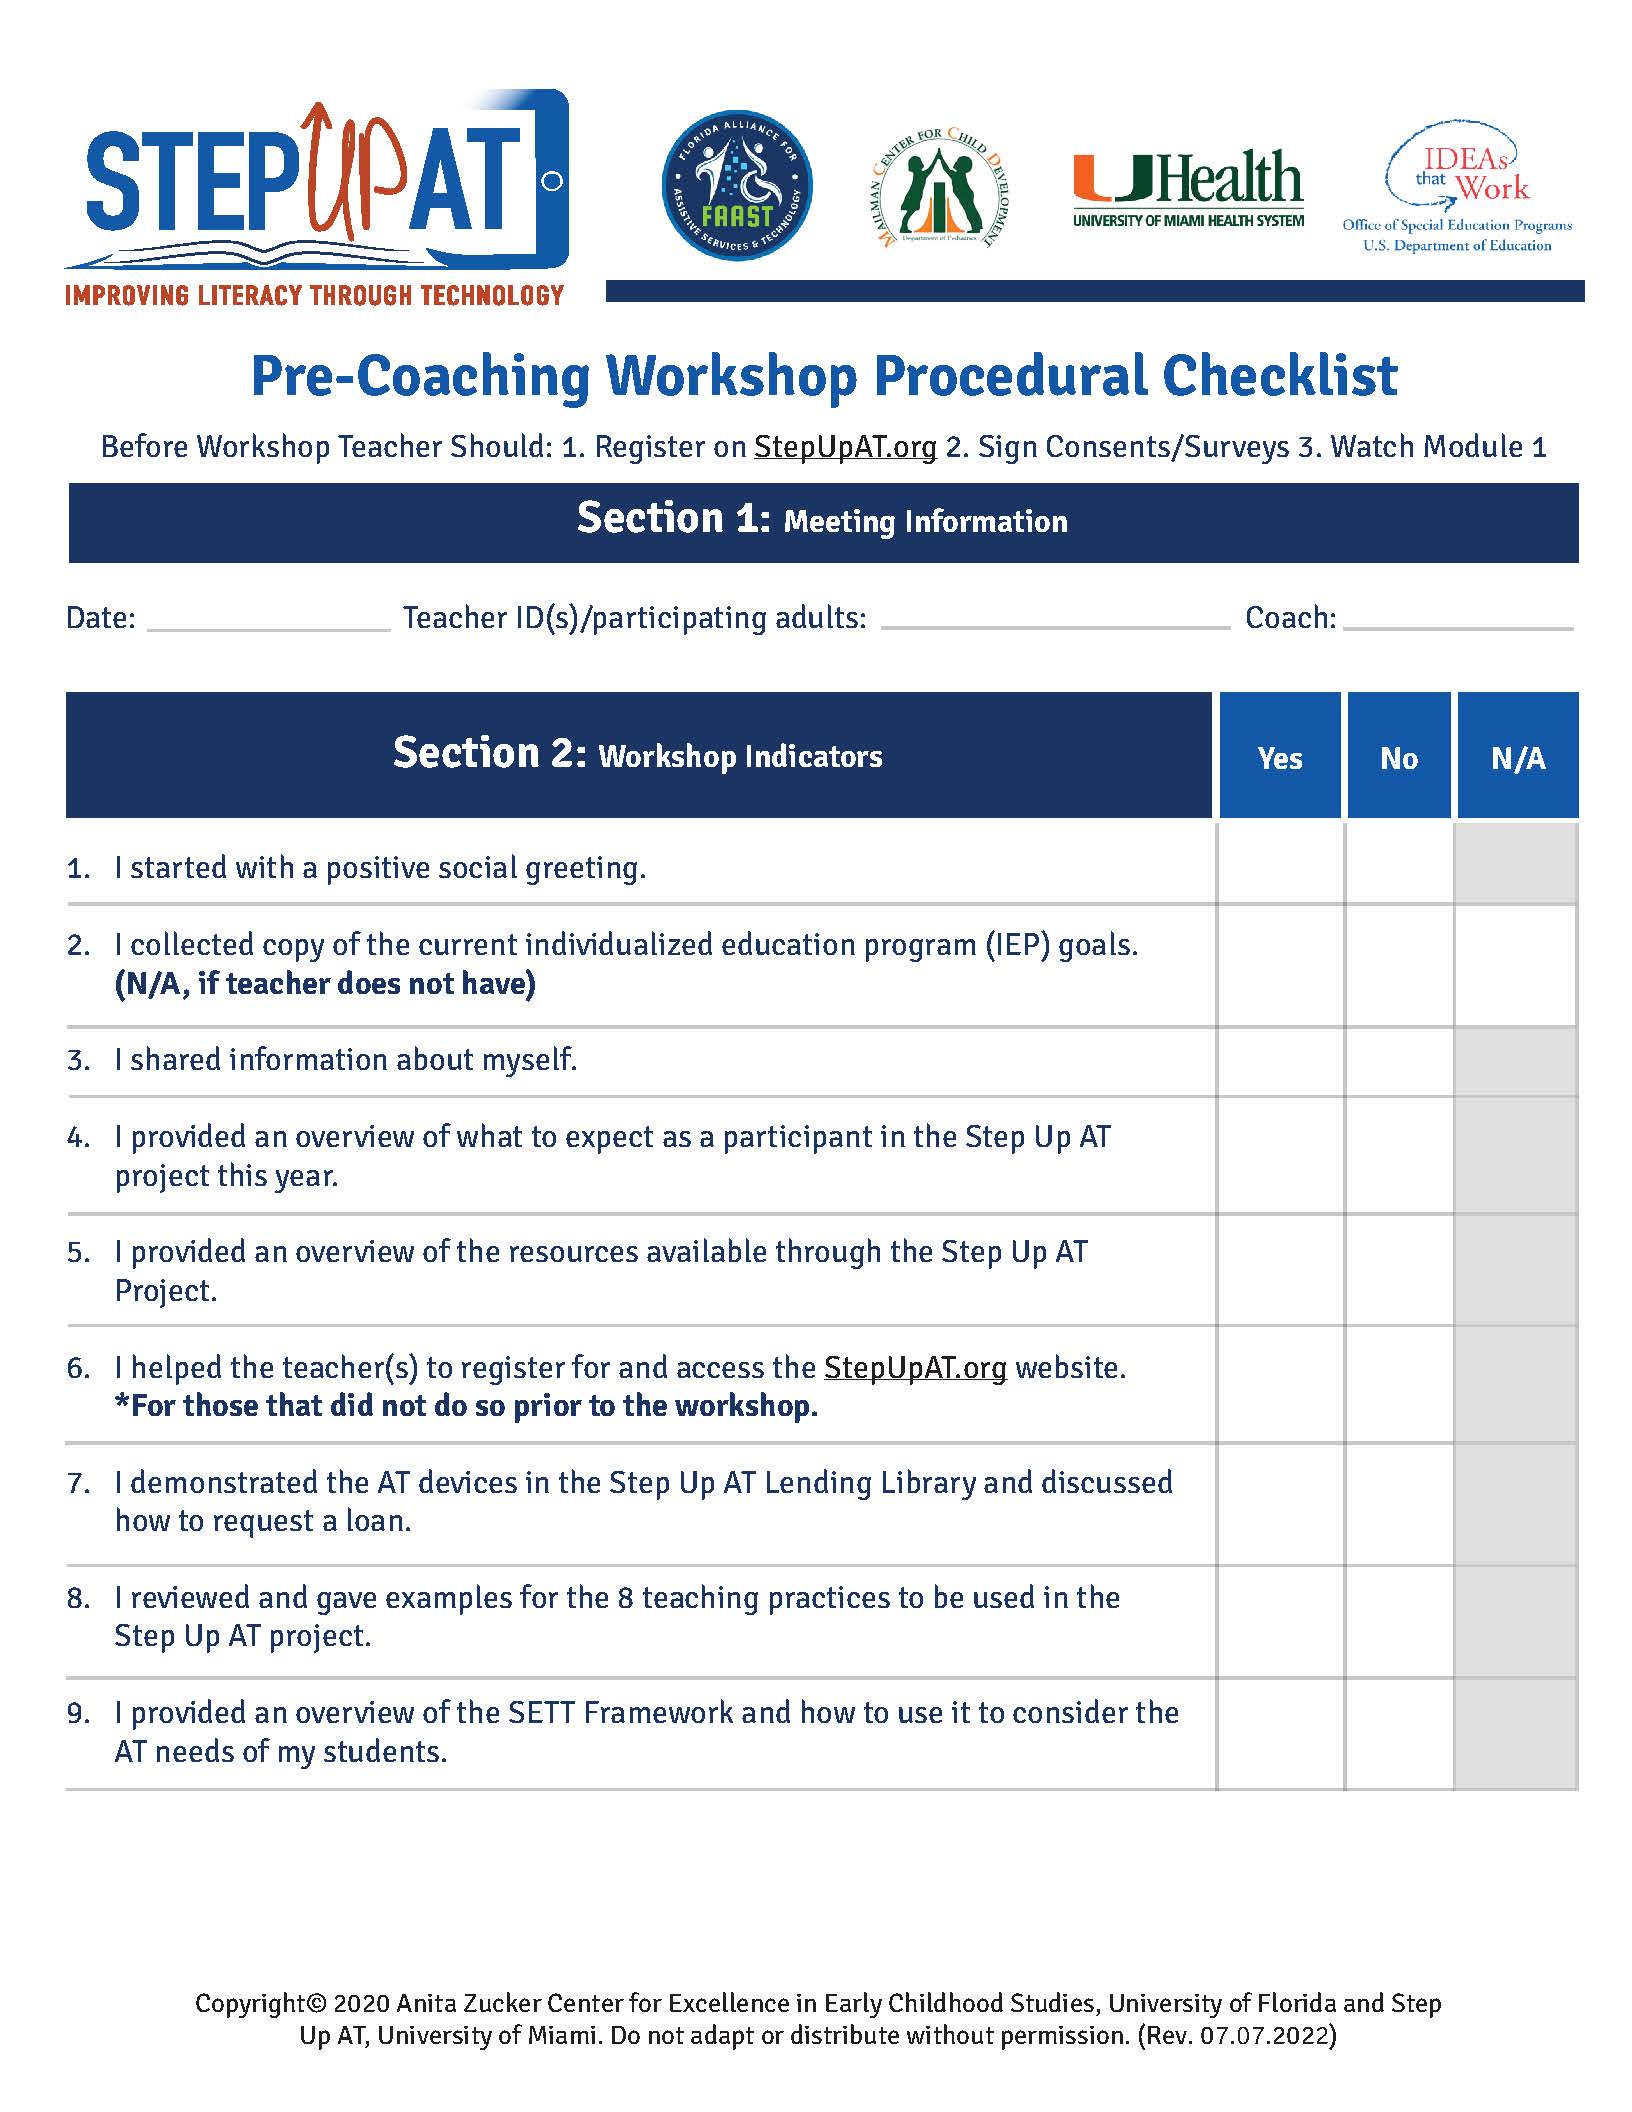 Step Up AT Pre-Coaching Procedural Checklist